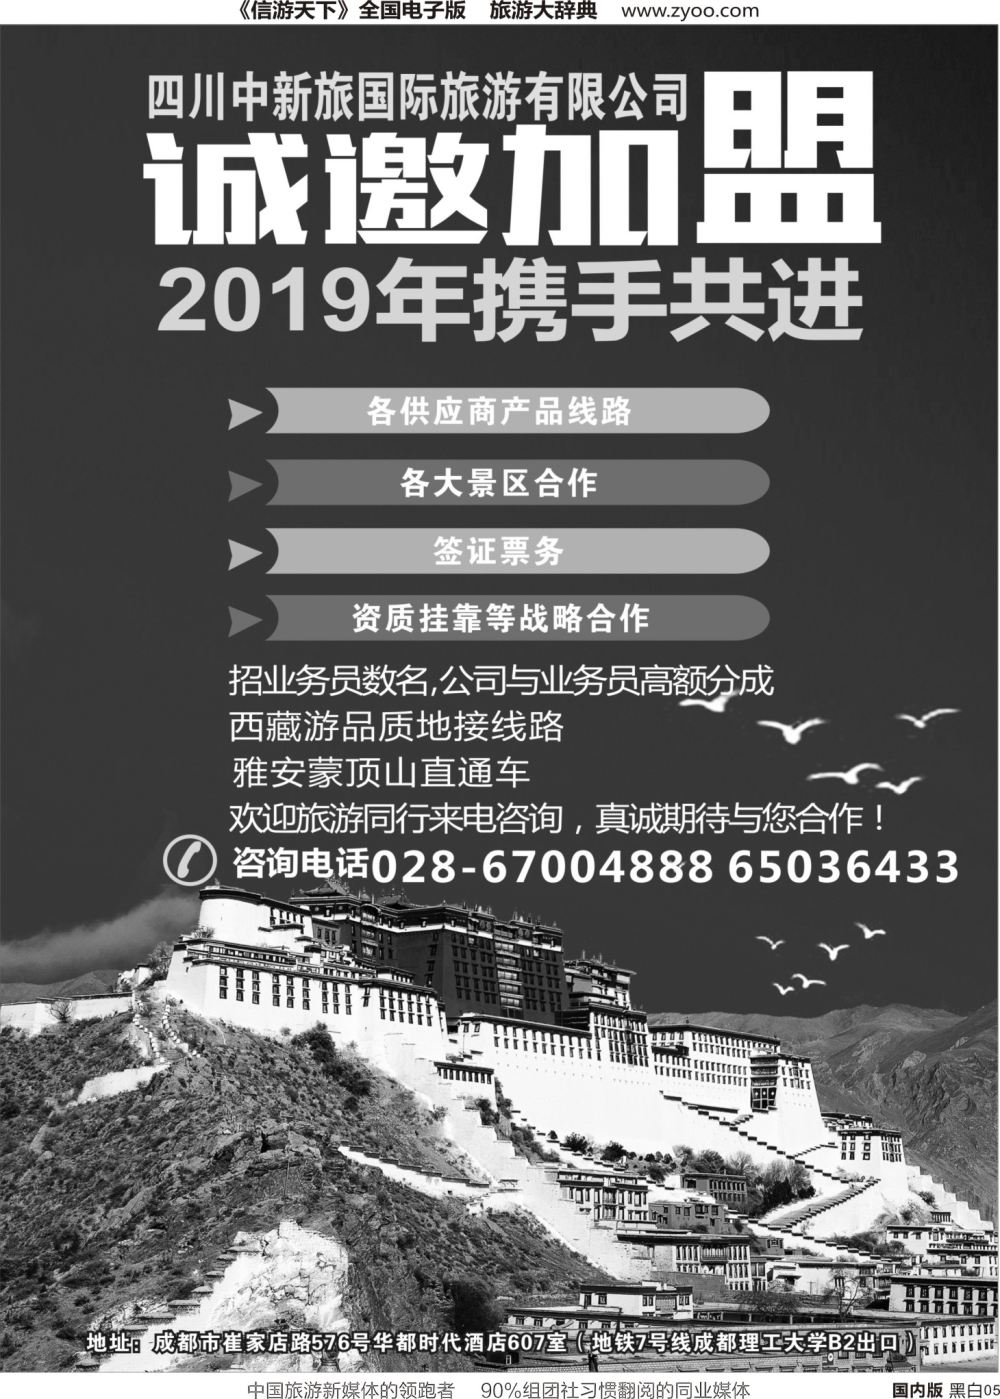 r黑005  四川中新旅国际旅游公司-招商加盟西藏